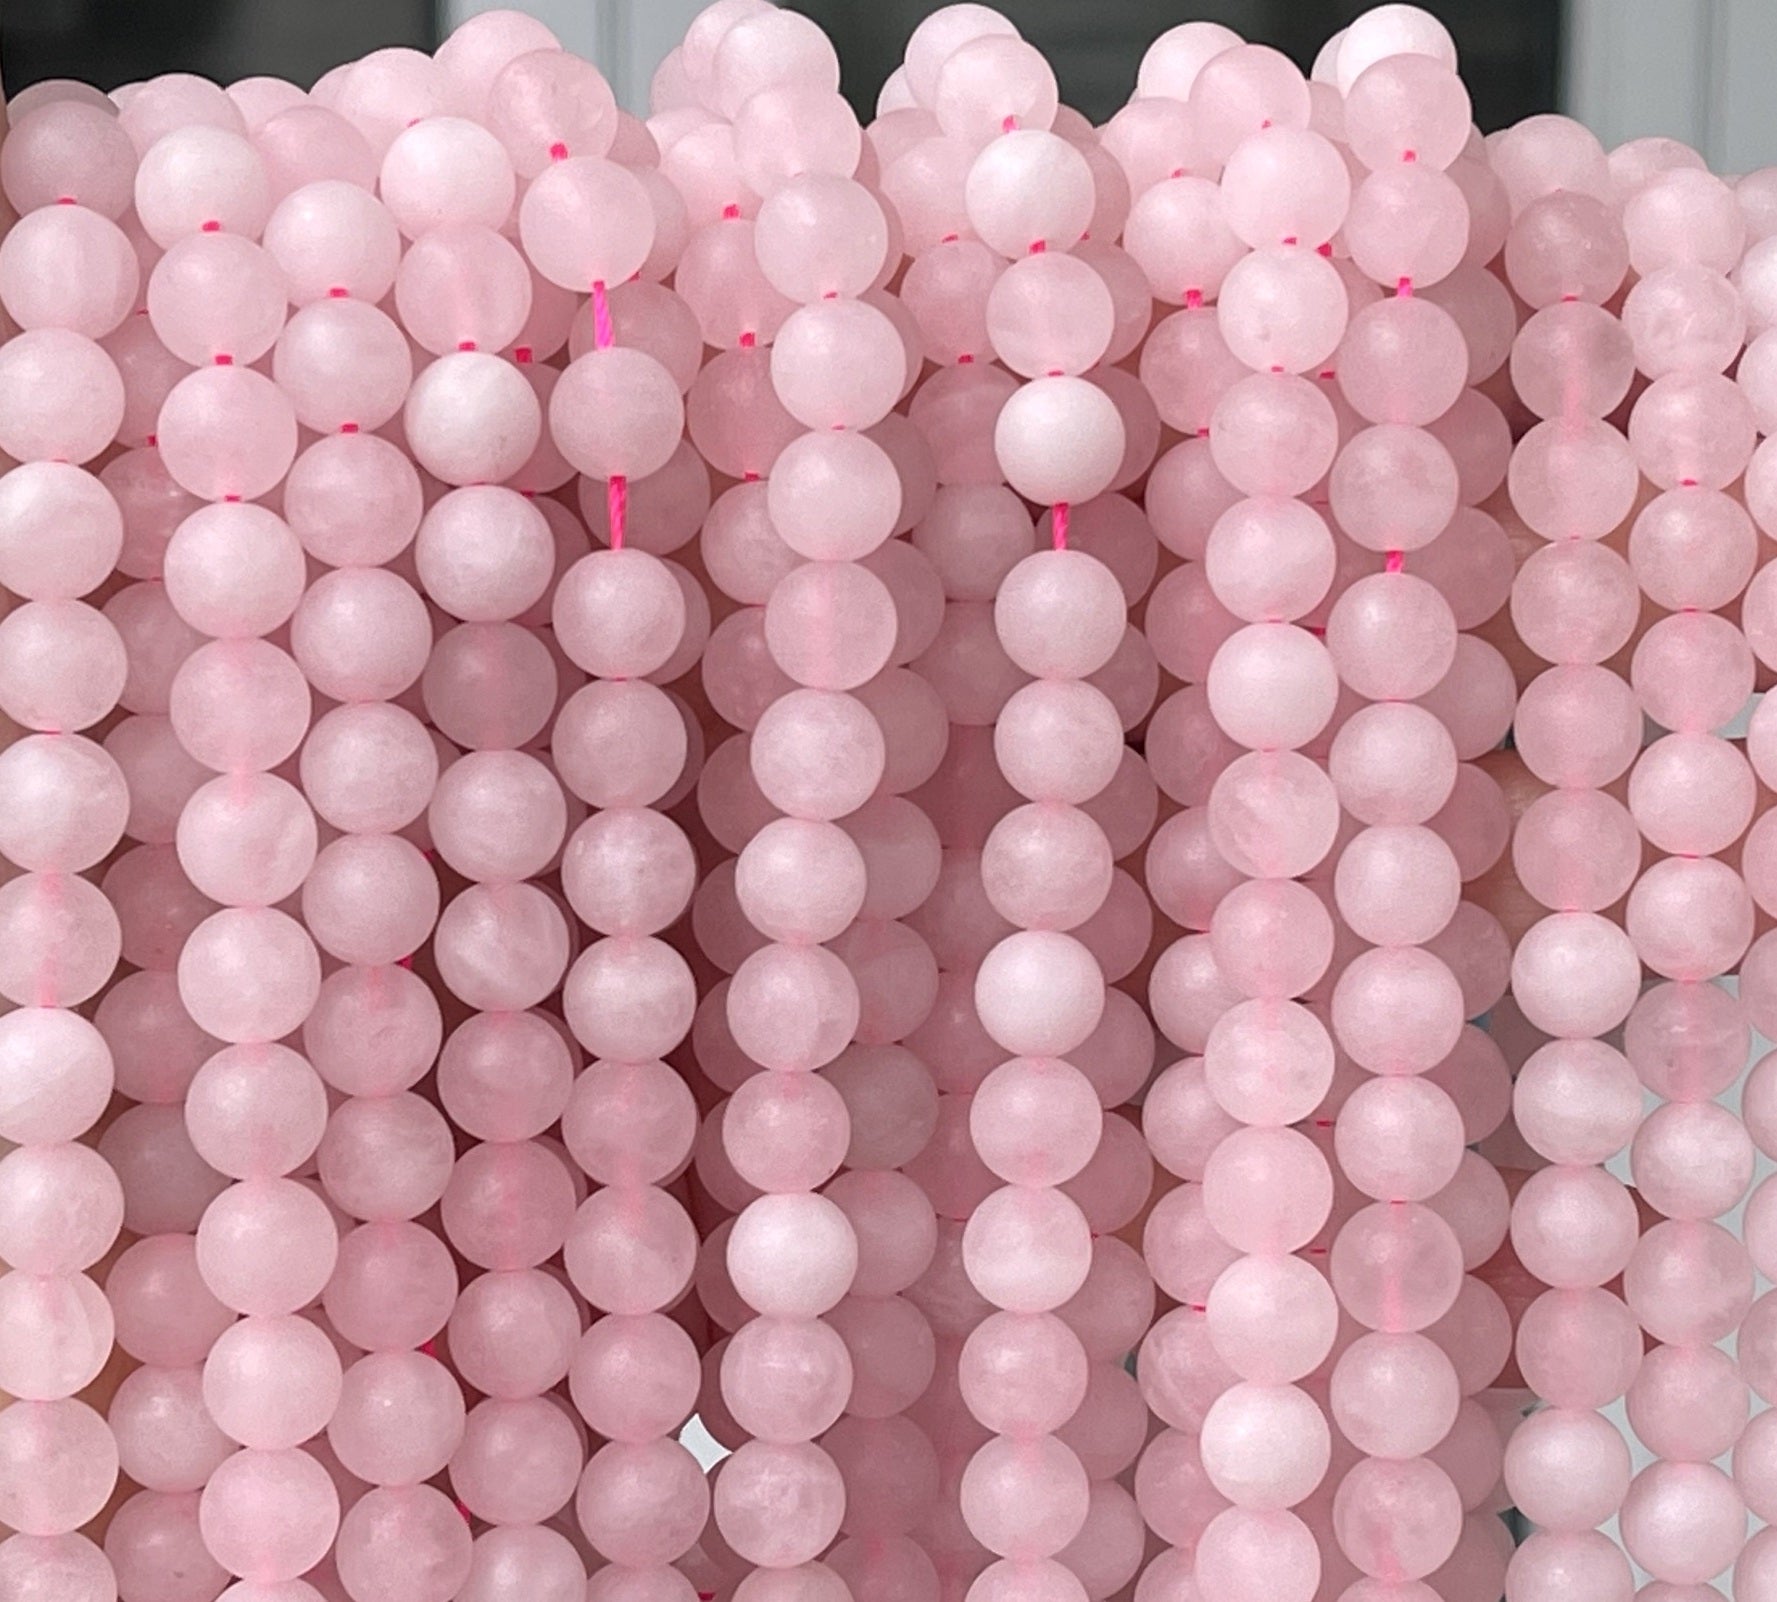 Rose Quartz matte 8mm round natural gemstone beads 15" strand - Oz Beads 